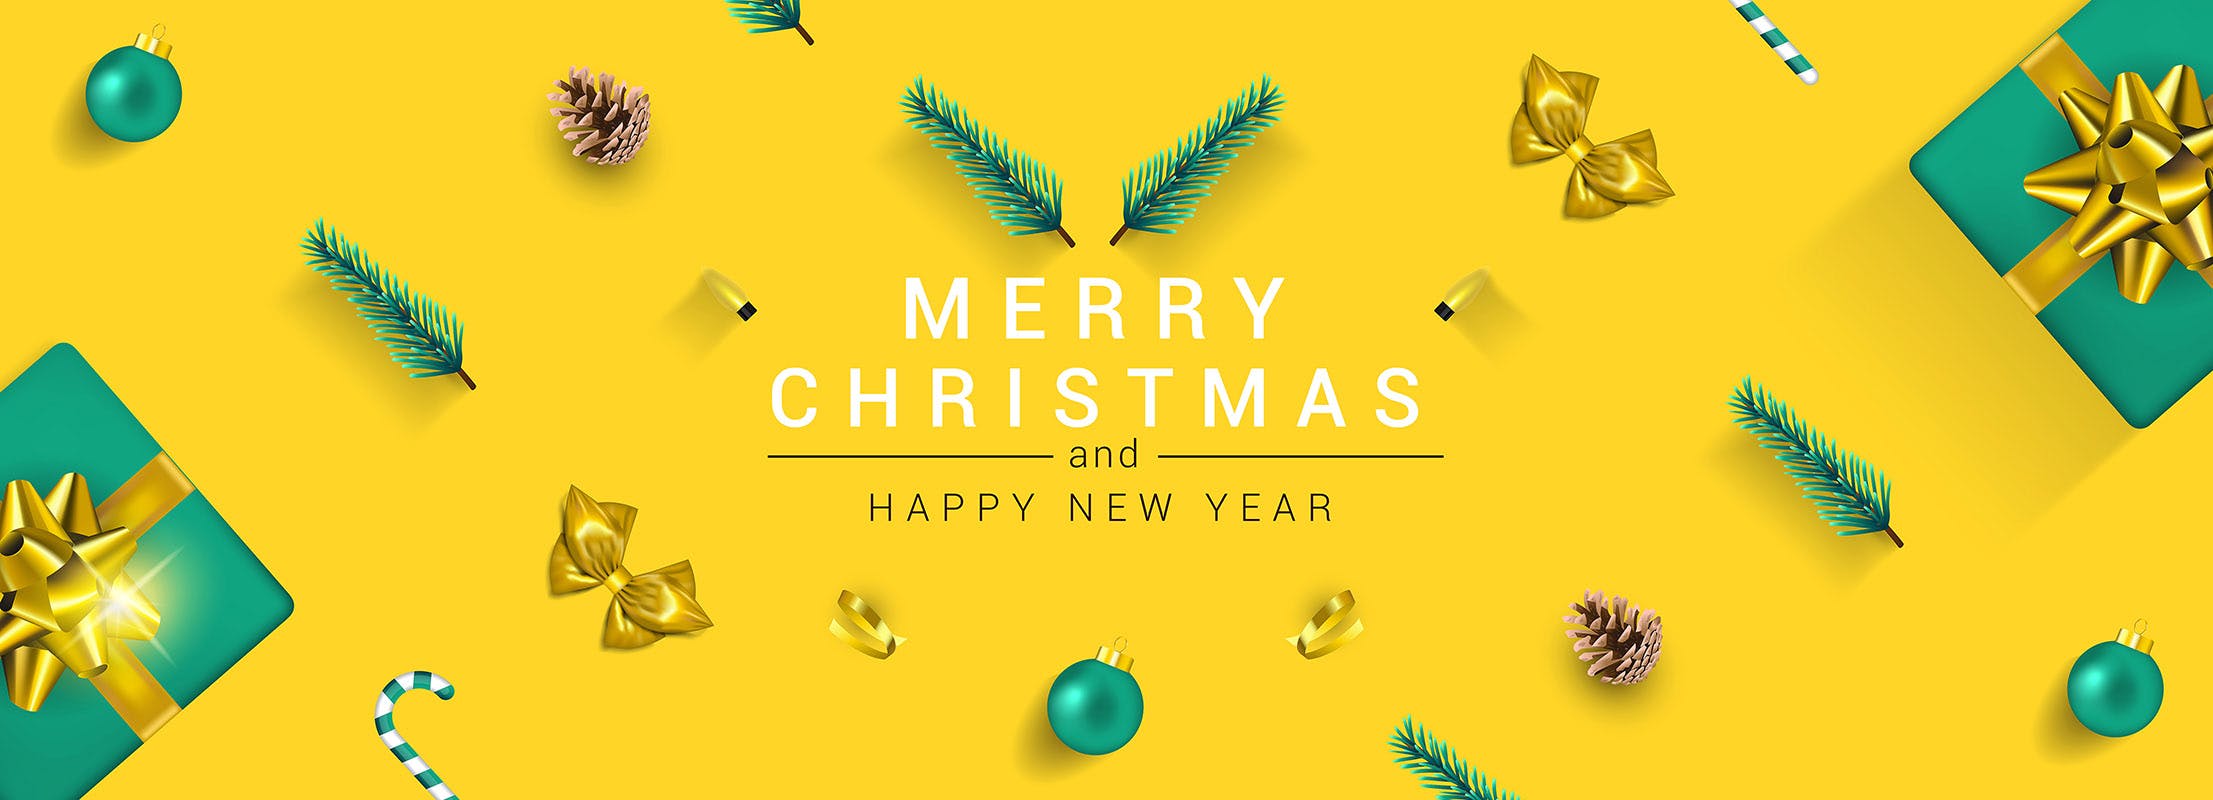 圣诞节&新年祝福主题贺卡设计模板v2 Merry Christmas and Happy New Year greeting cards插图(7)